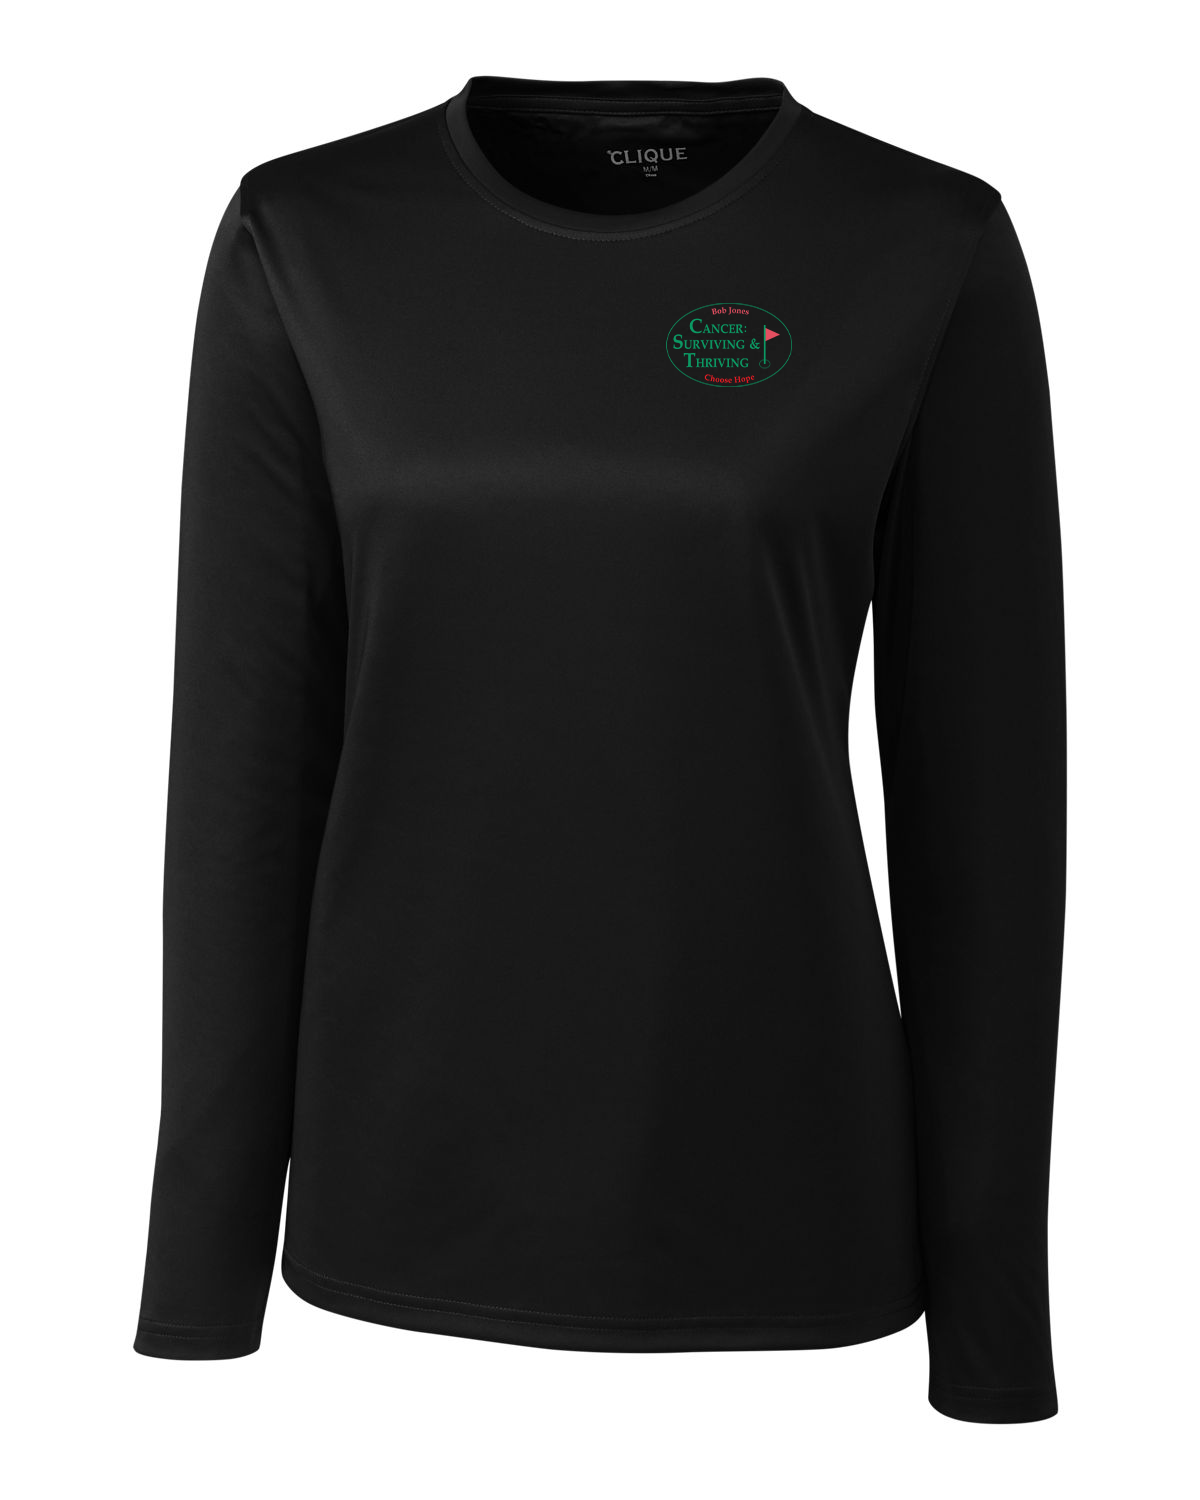 custom design of CUTTER & BUCK LQK00067 - Clique Spin Eco Performance Long Sleeve Womens Tee Shirt